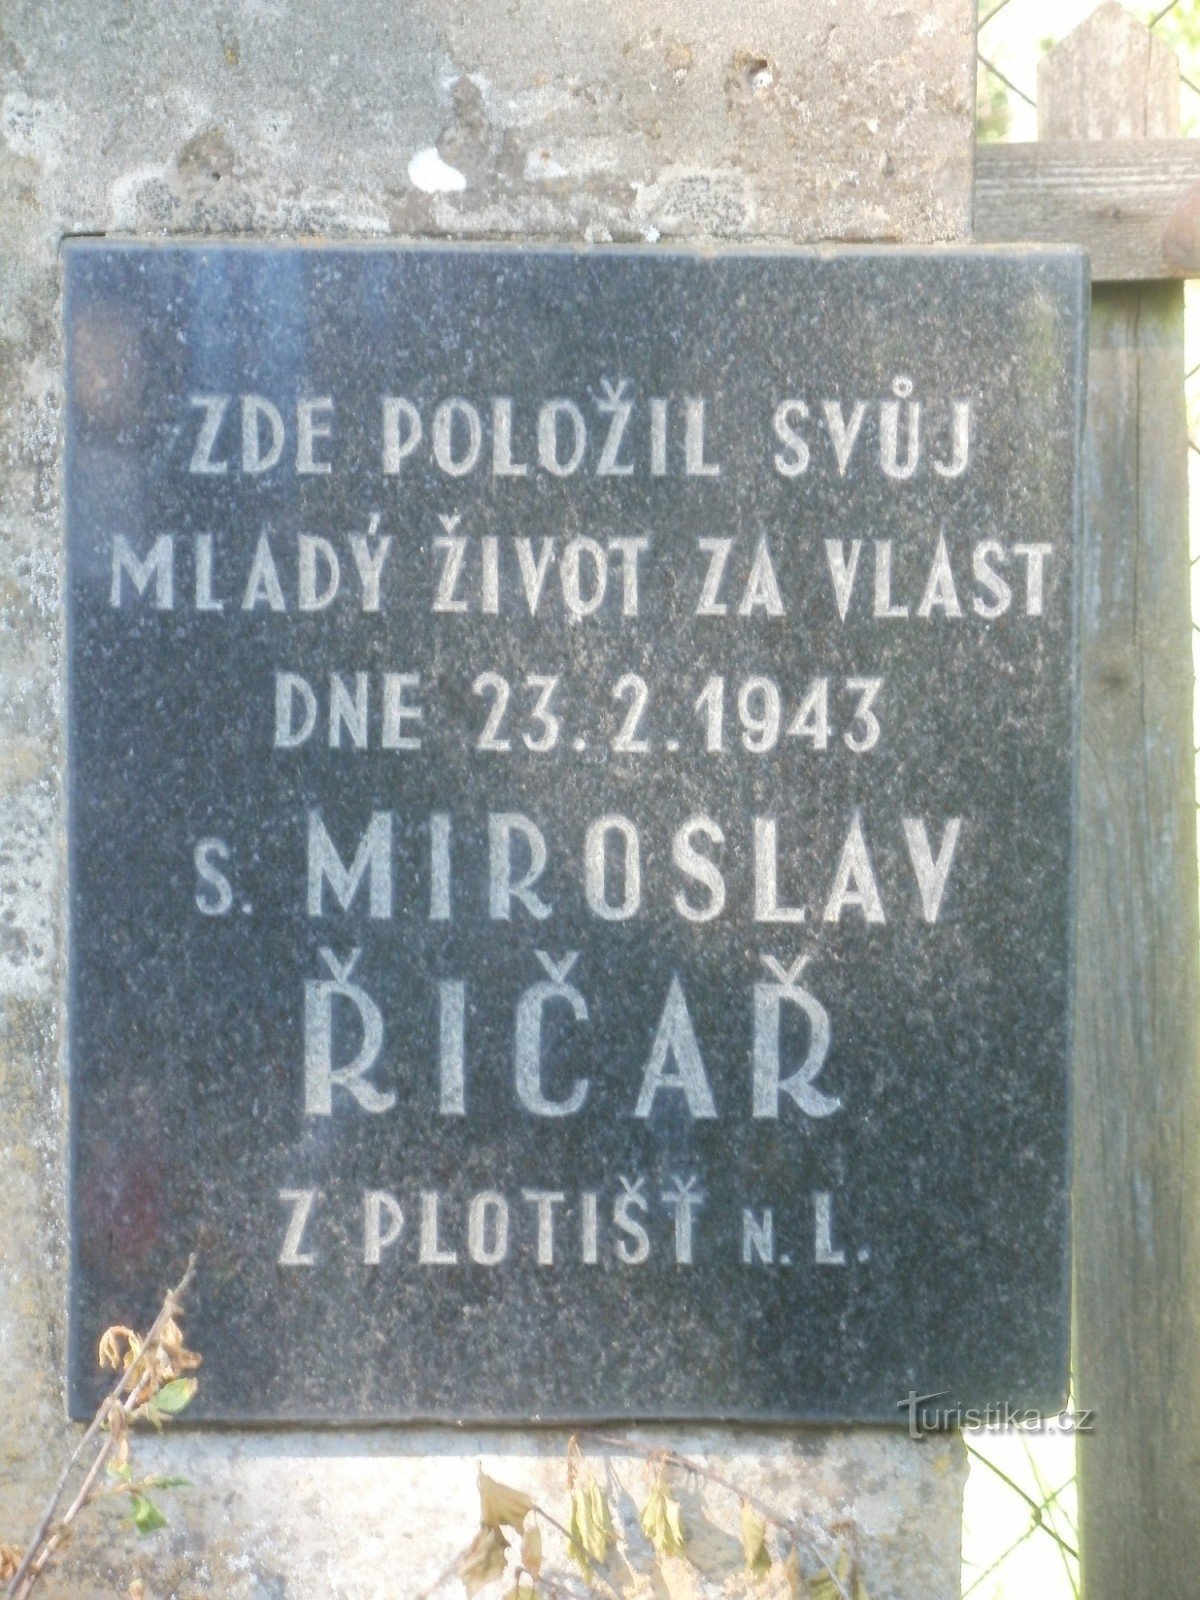 gedenkteken voor de heer Říčař bij Týniště nad Orlicí